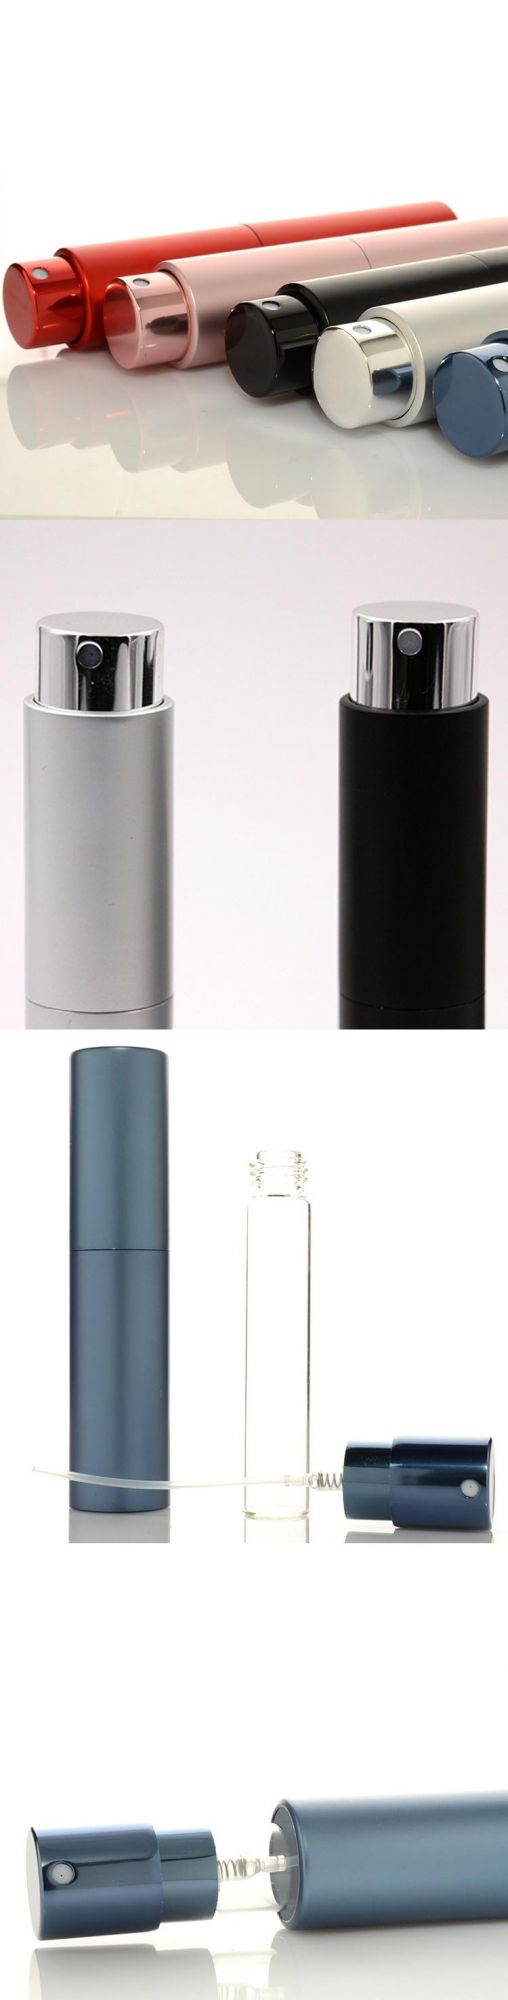 Customized 8ml Aluminum Twist Atomizer Spray Bottle Glass for Perfume